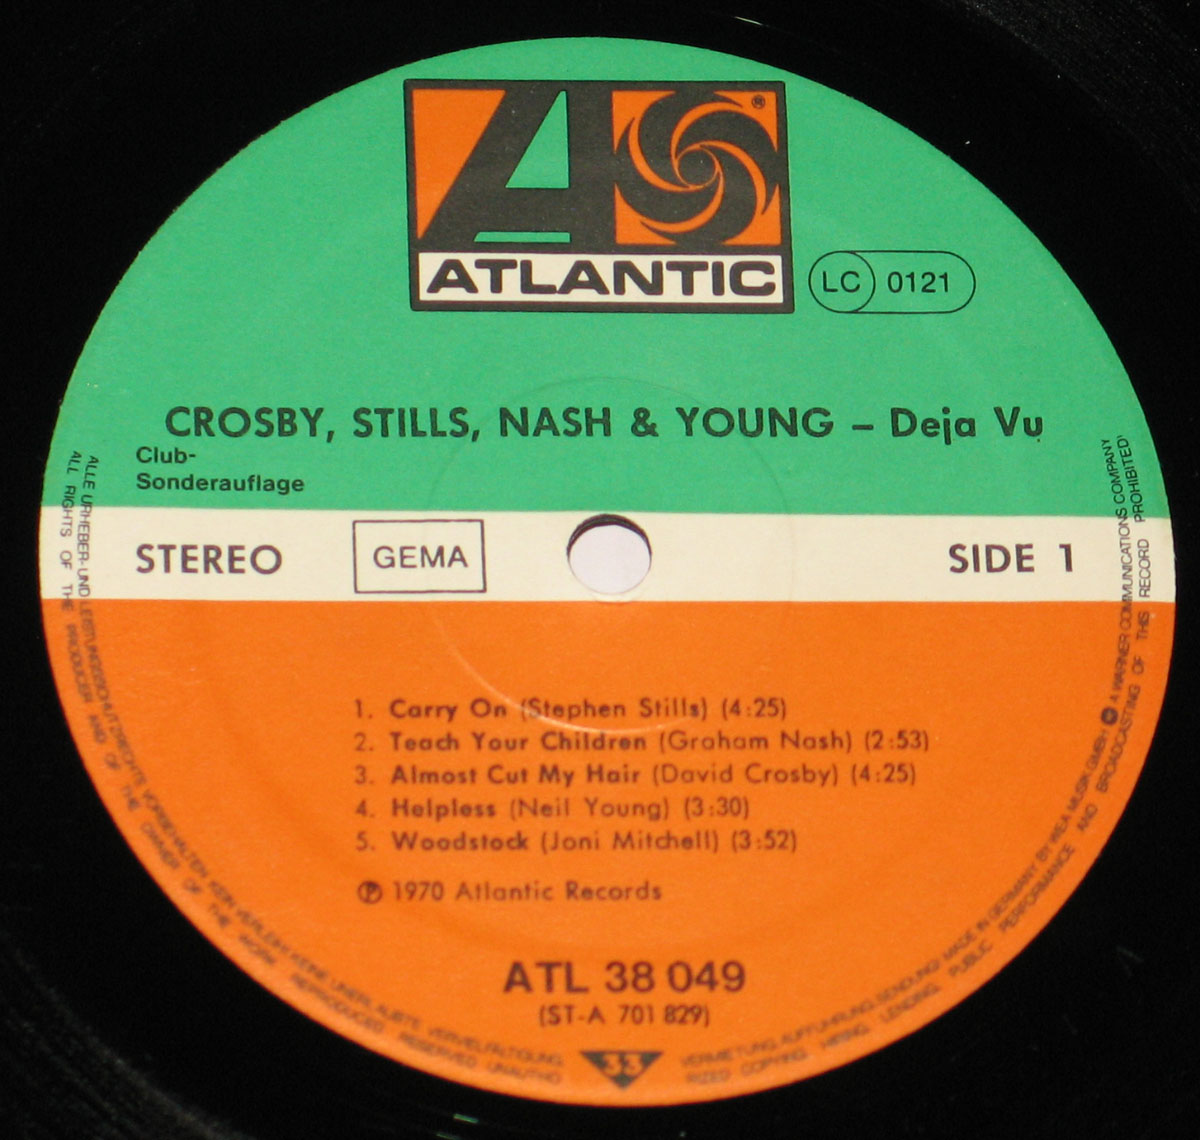 High Resolution Photo Crosby, Stills, Nash and Young - Deja Vu Club Edition Vinyl Record